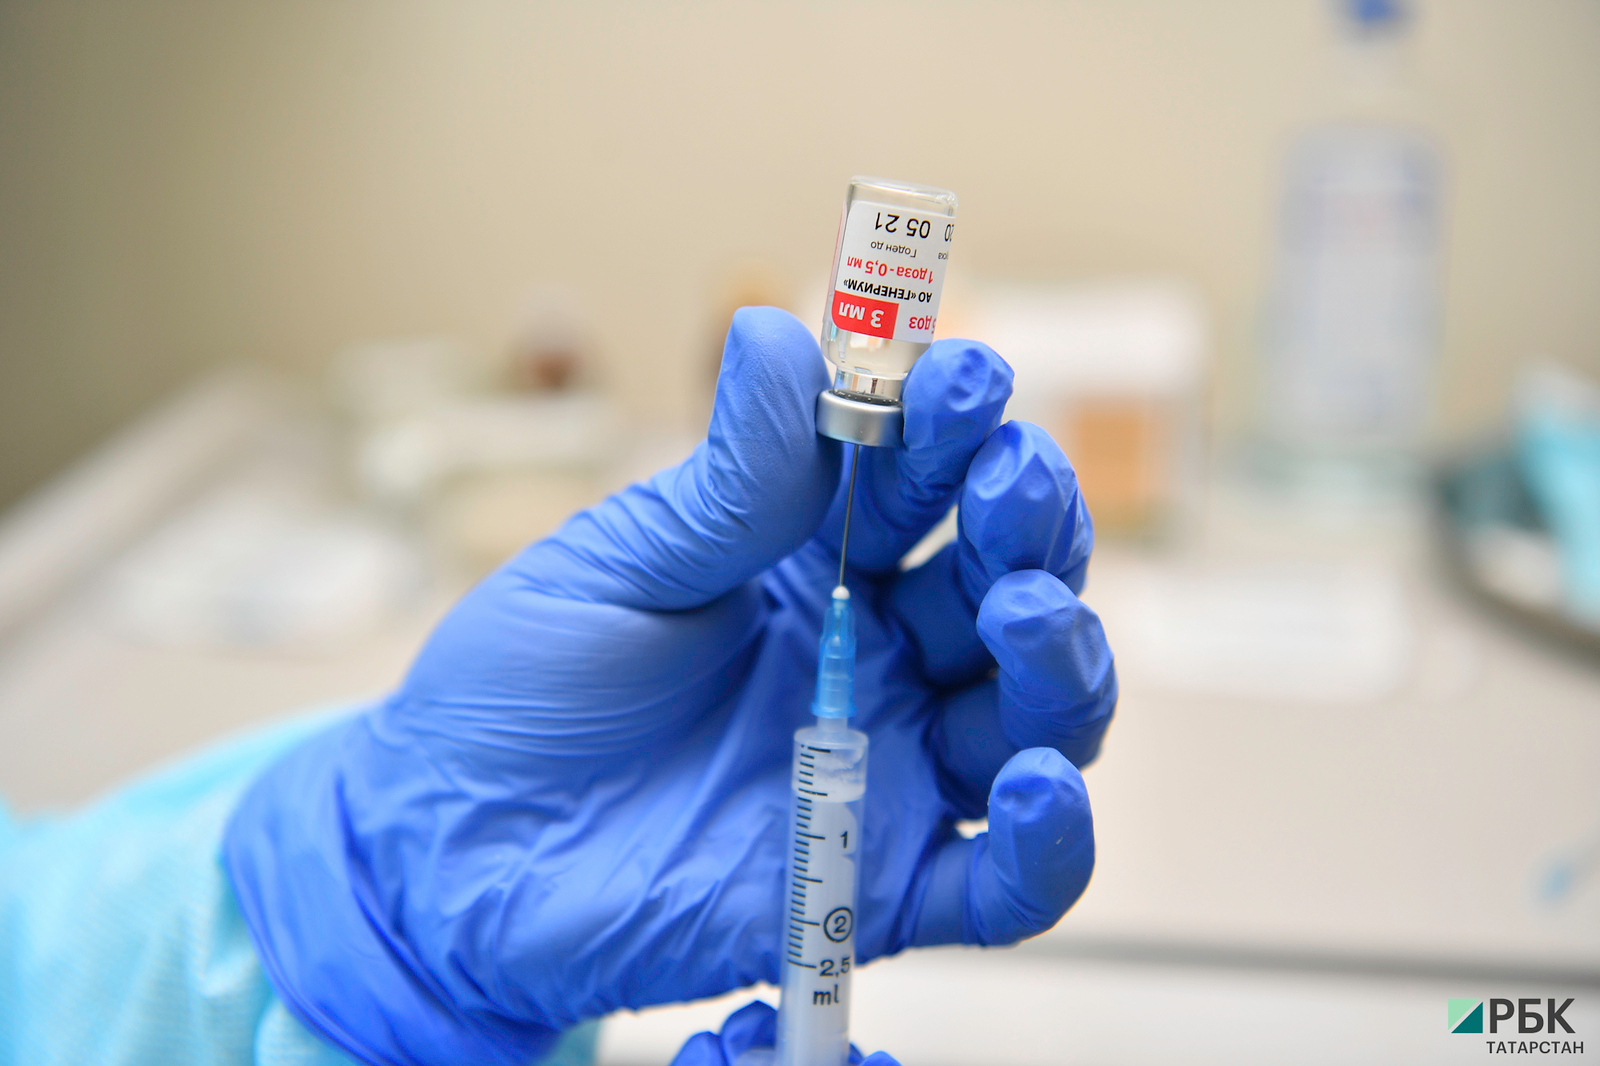 Служебный укол: в РТ появились вакансии с требованием вакцинации от COVID